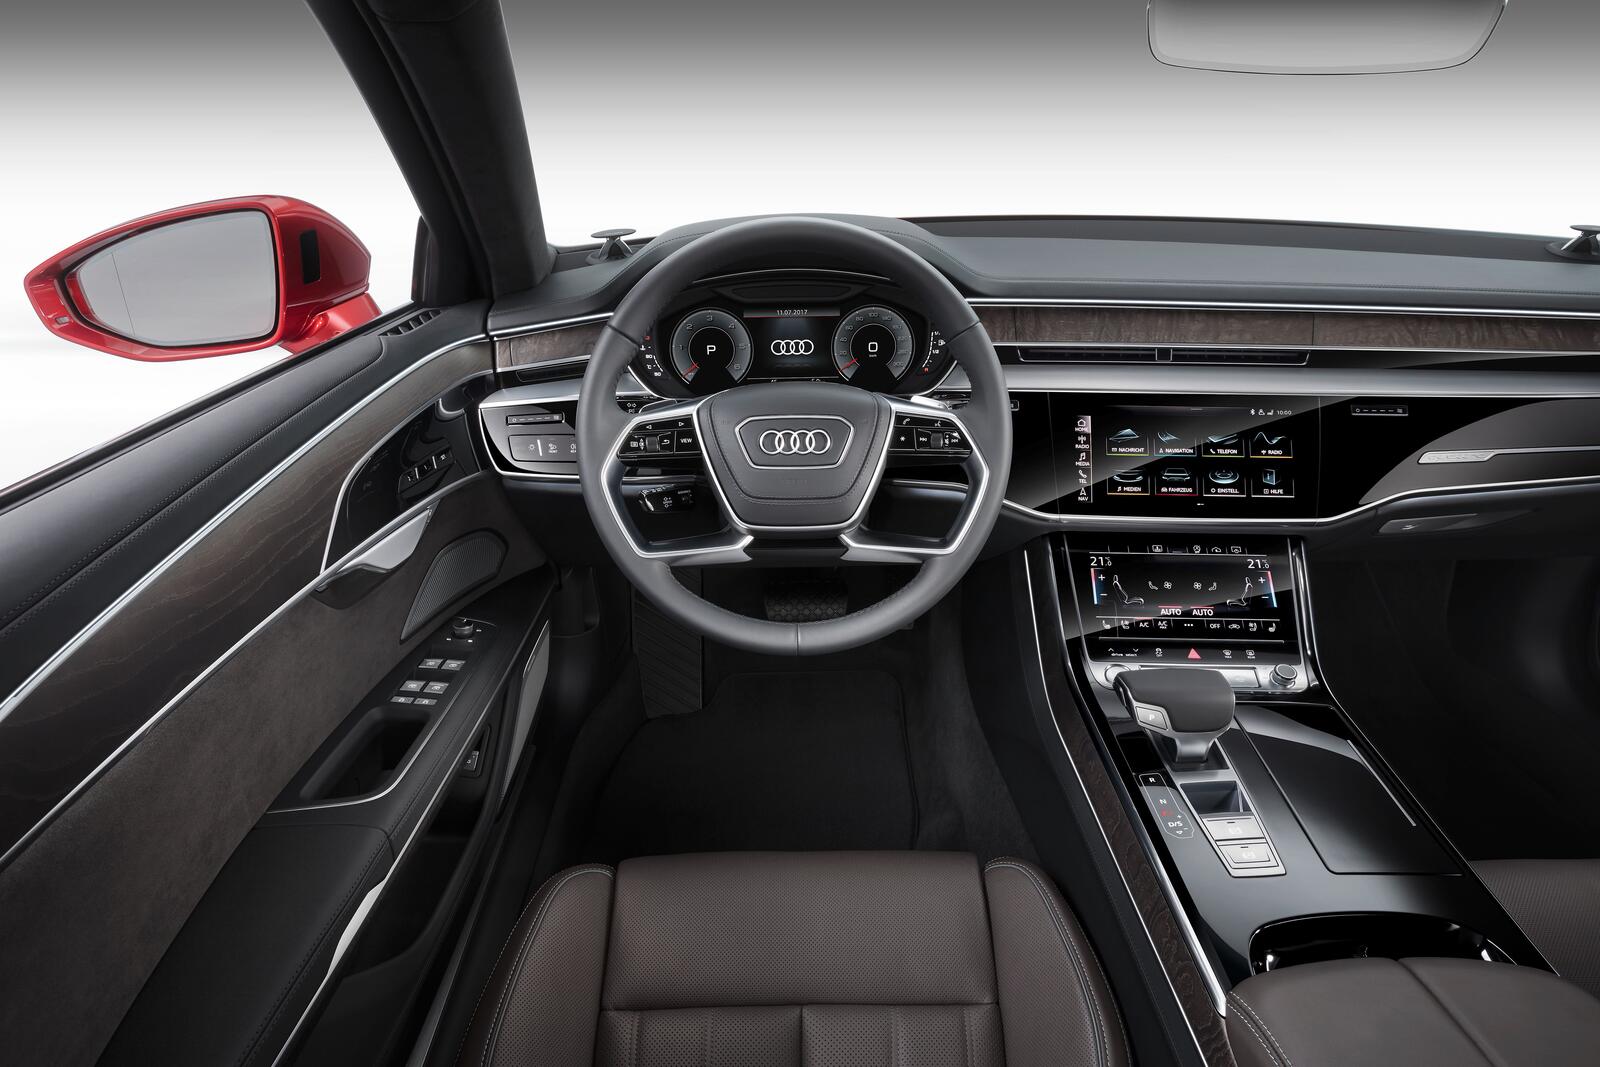 Wallpapers Audi A8 car interior on the desktop